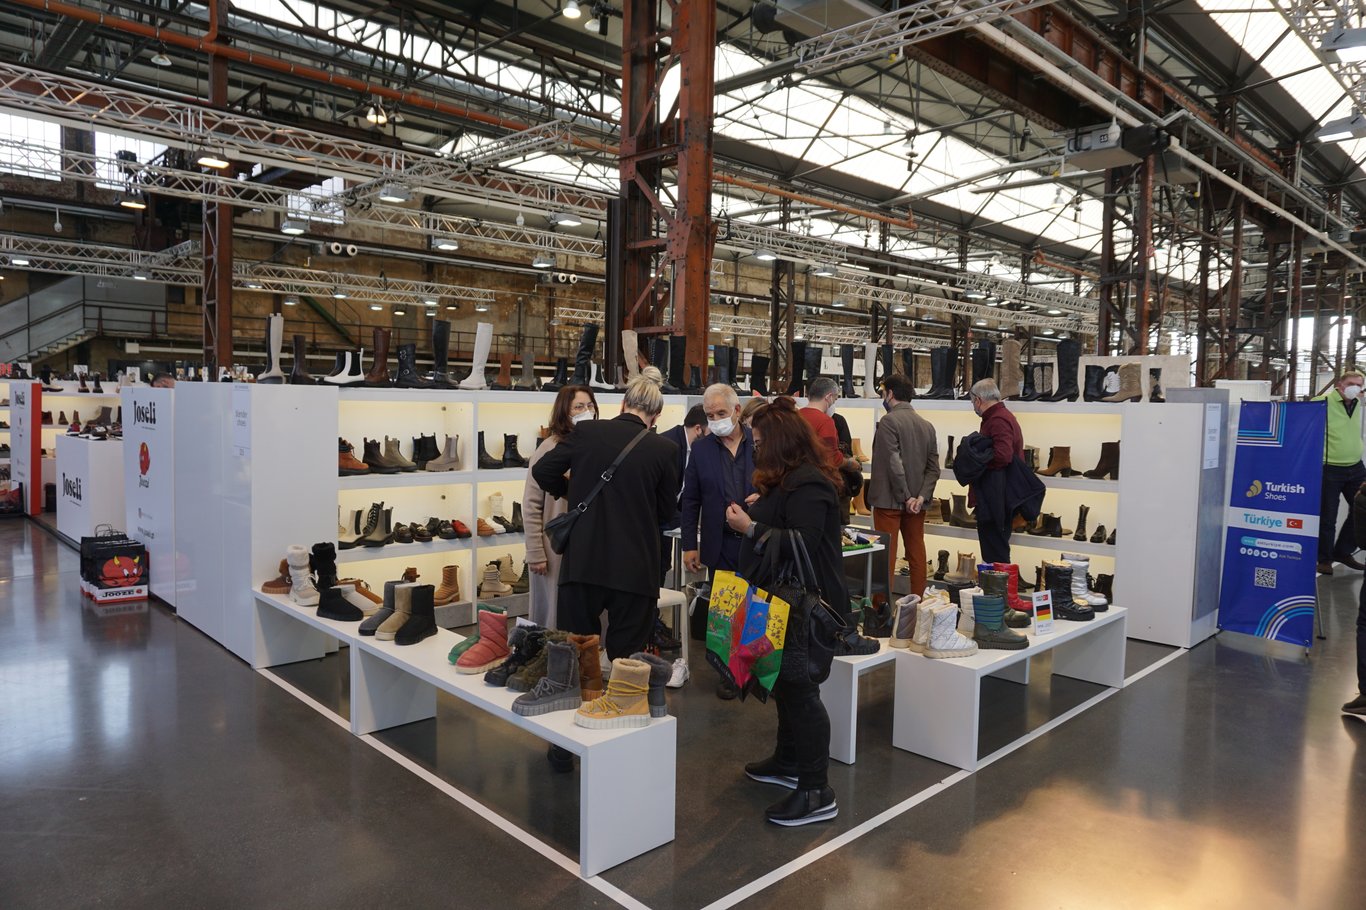 Turkish Shoes @ SHOES DÜSSELDORF 2022-1 @ Gallery Shoes Dusseldorf